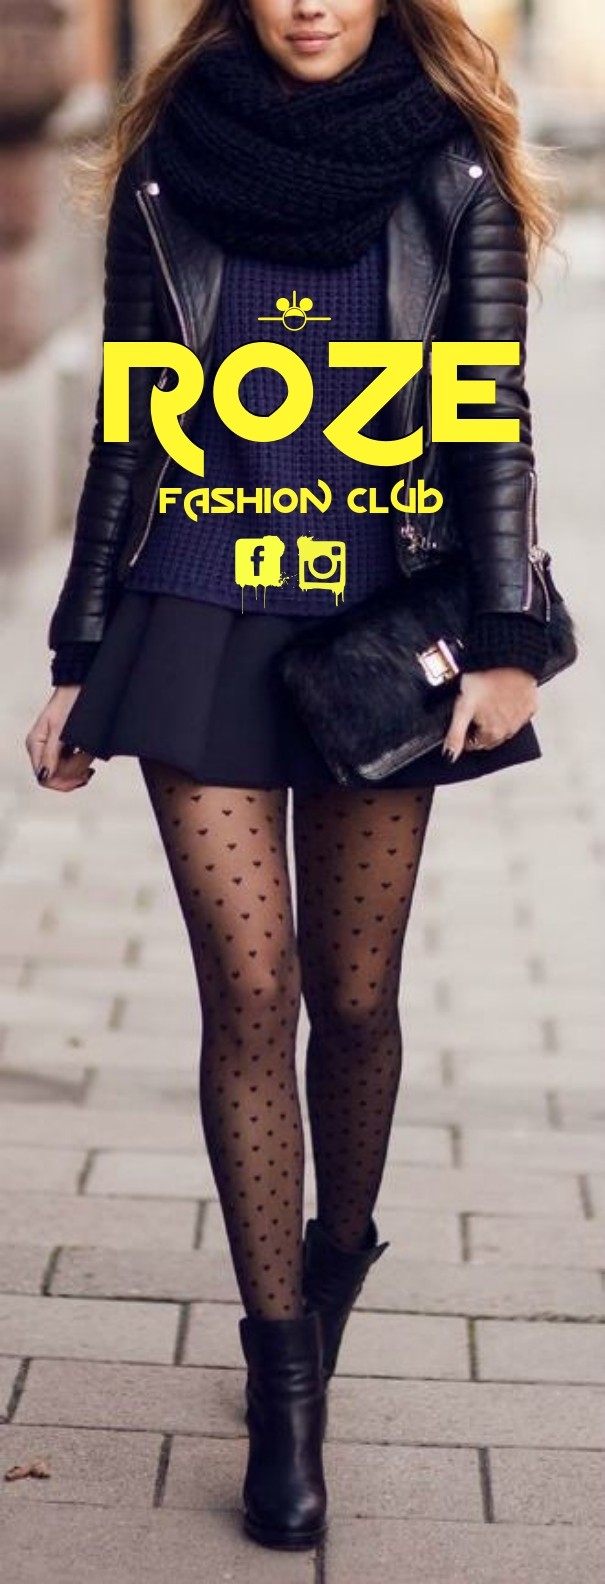 Roze fashion club Design 